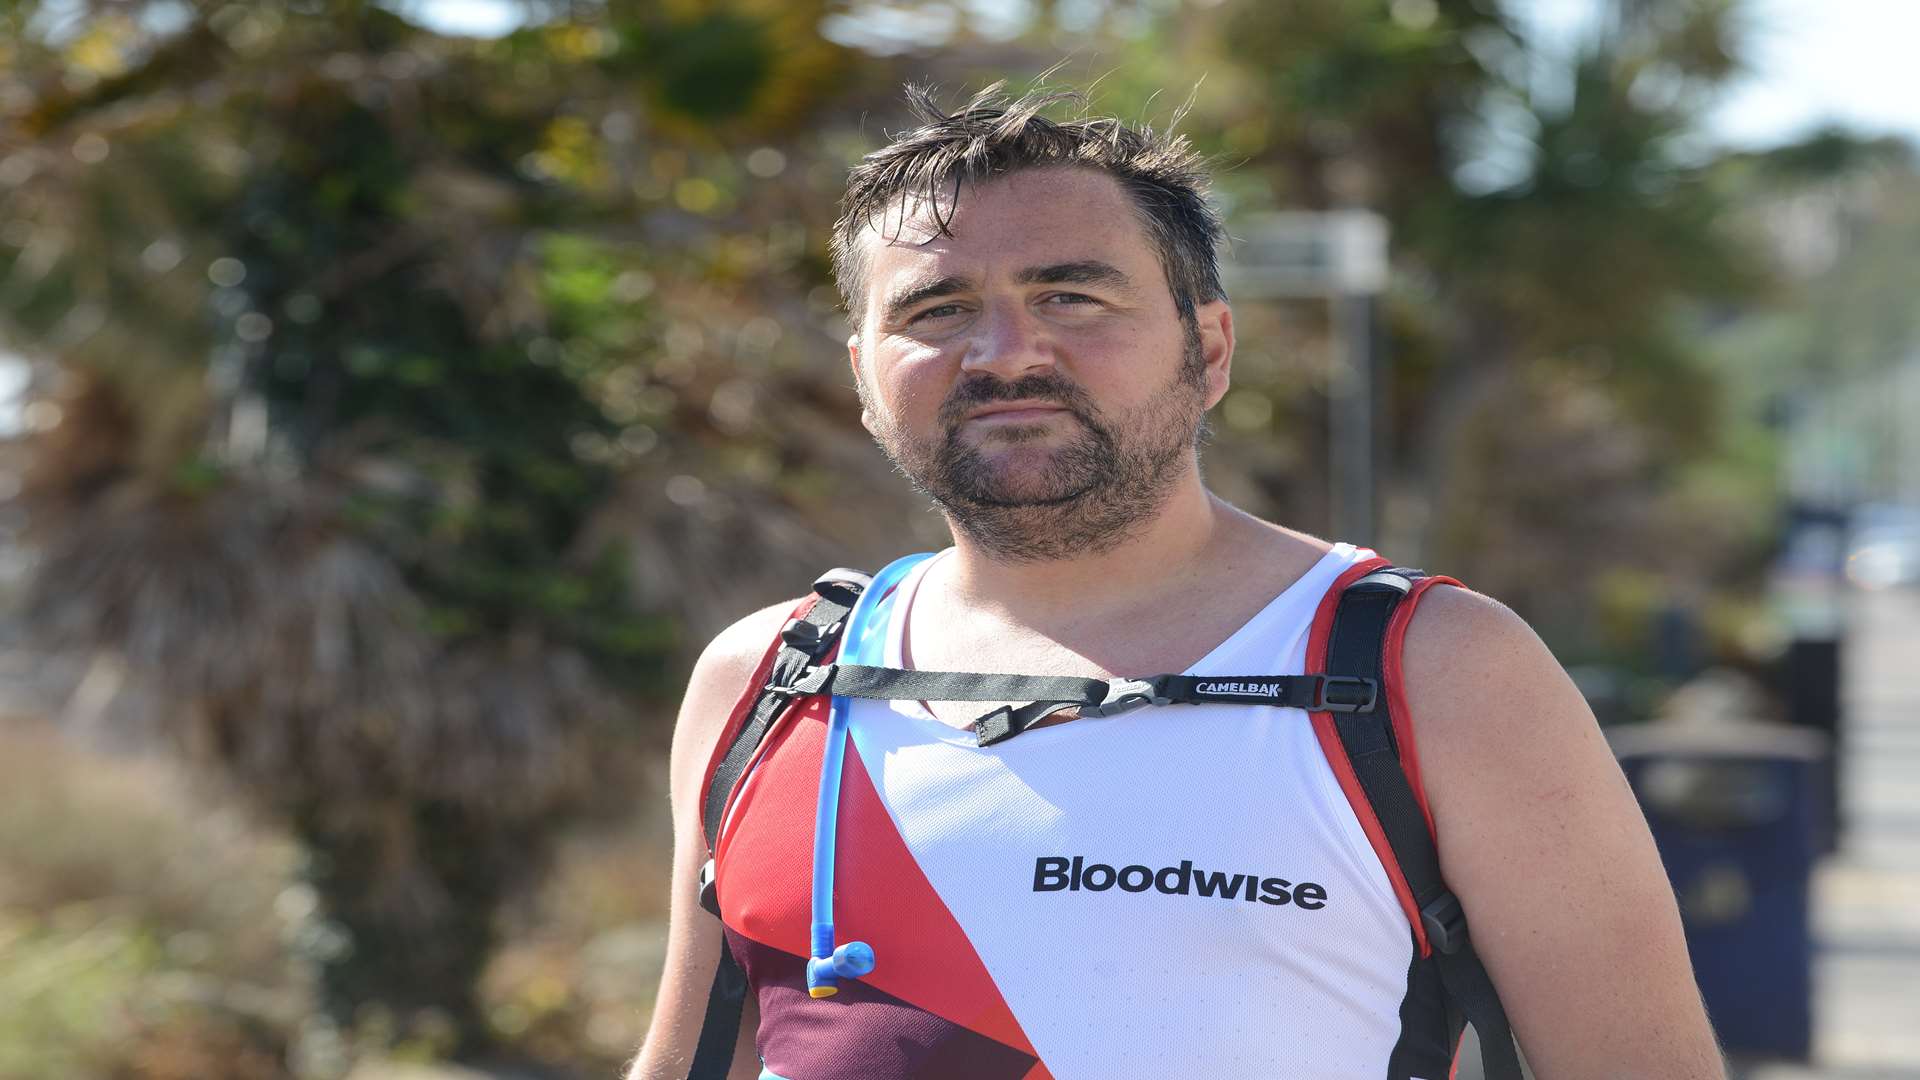 Mark Macfarlane ran seven half marathons in seven days in tribute to his friend Stephen Adams who died in June